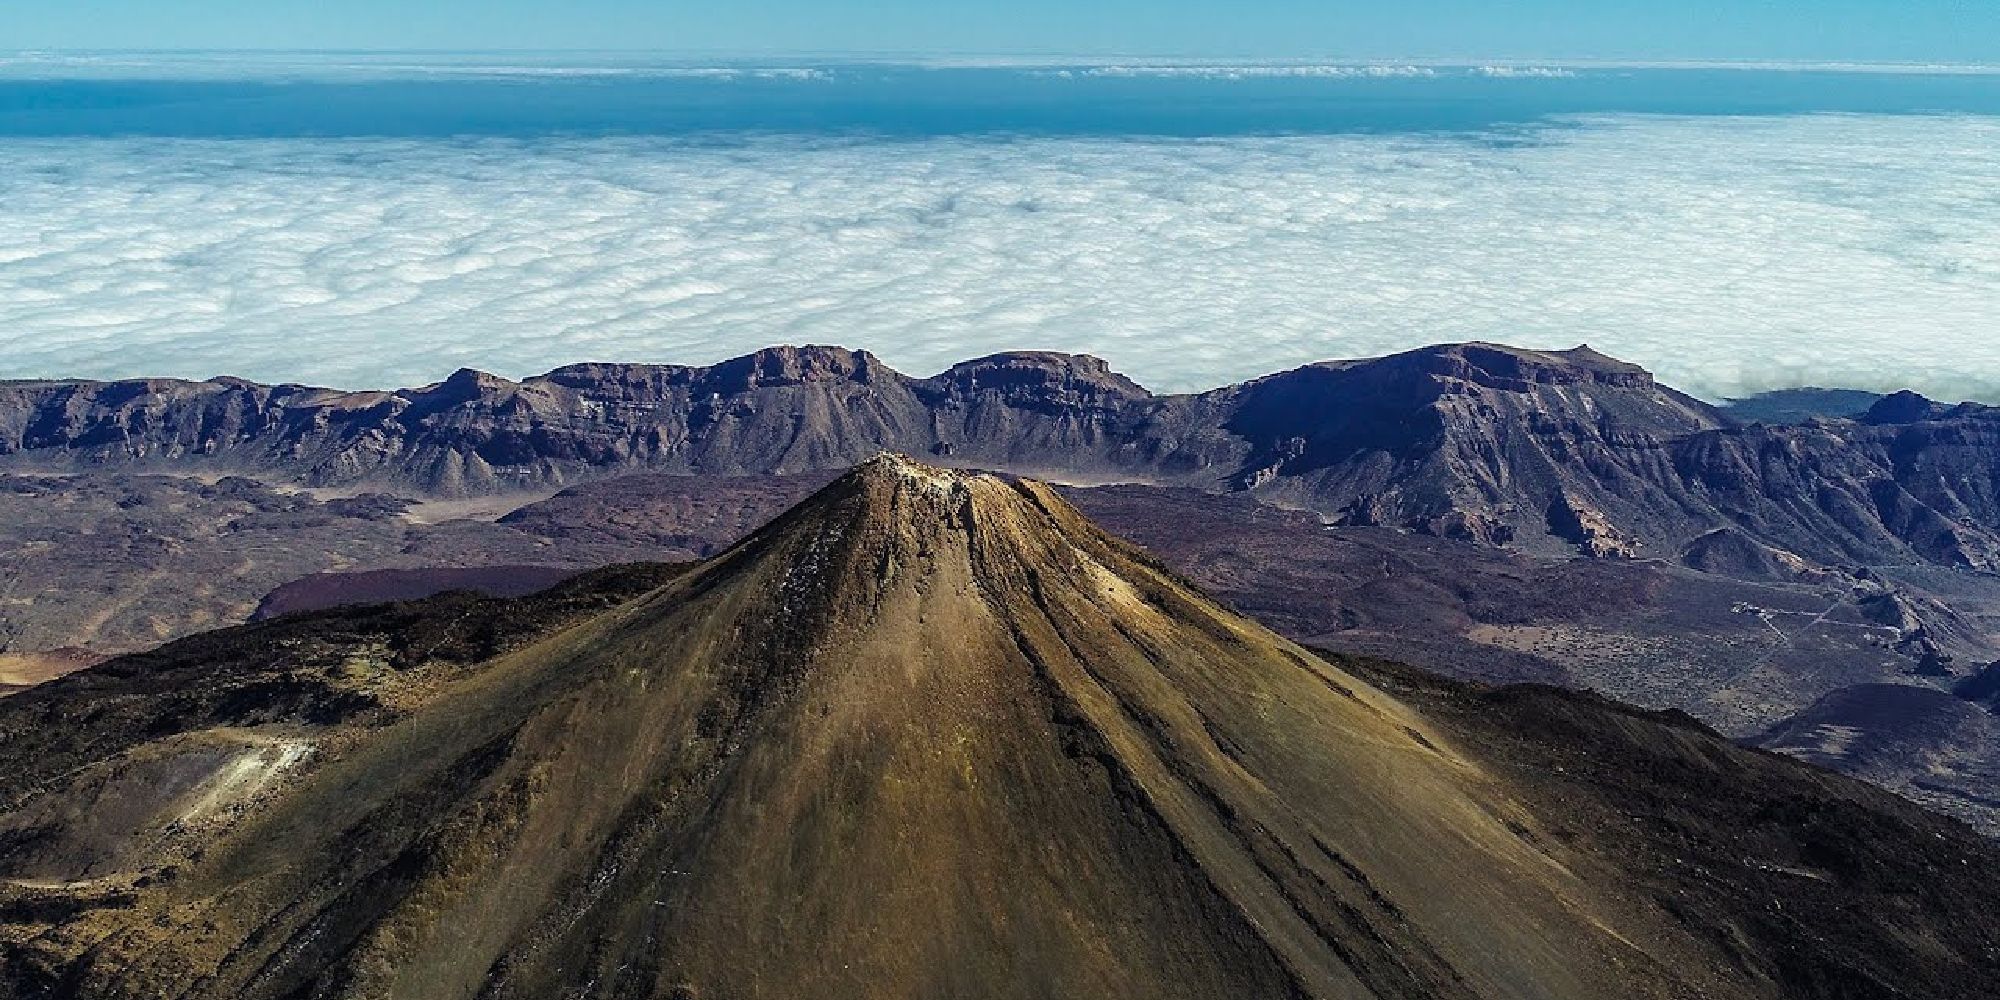 Mount Teide Volcano in Tenerife in the Canary Islands, Spain